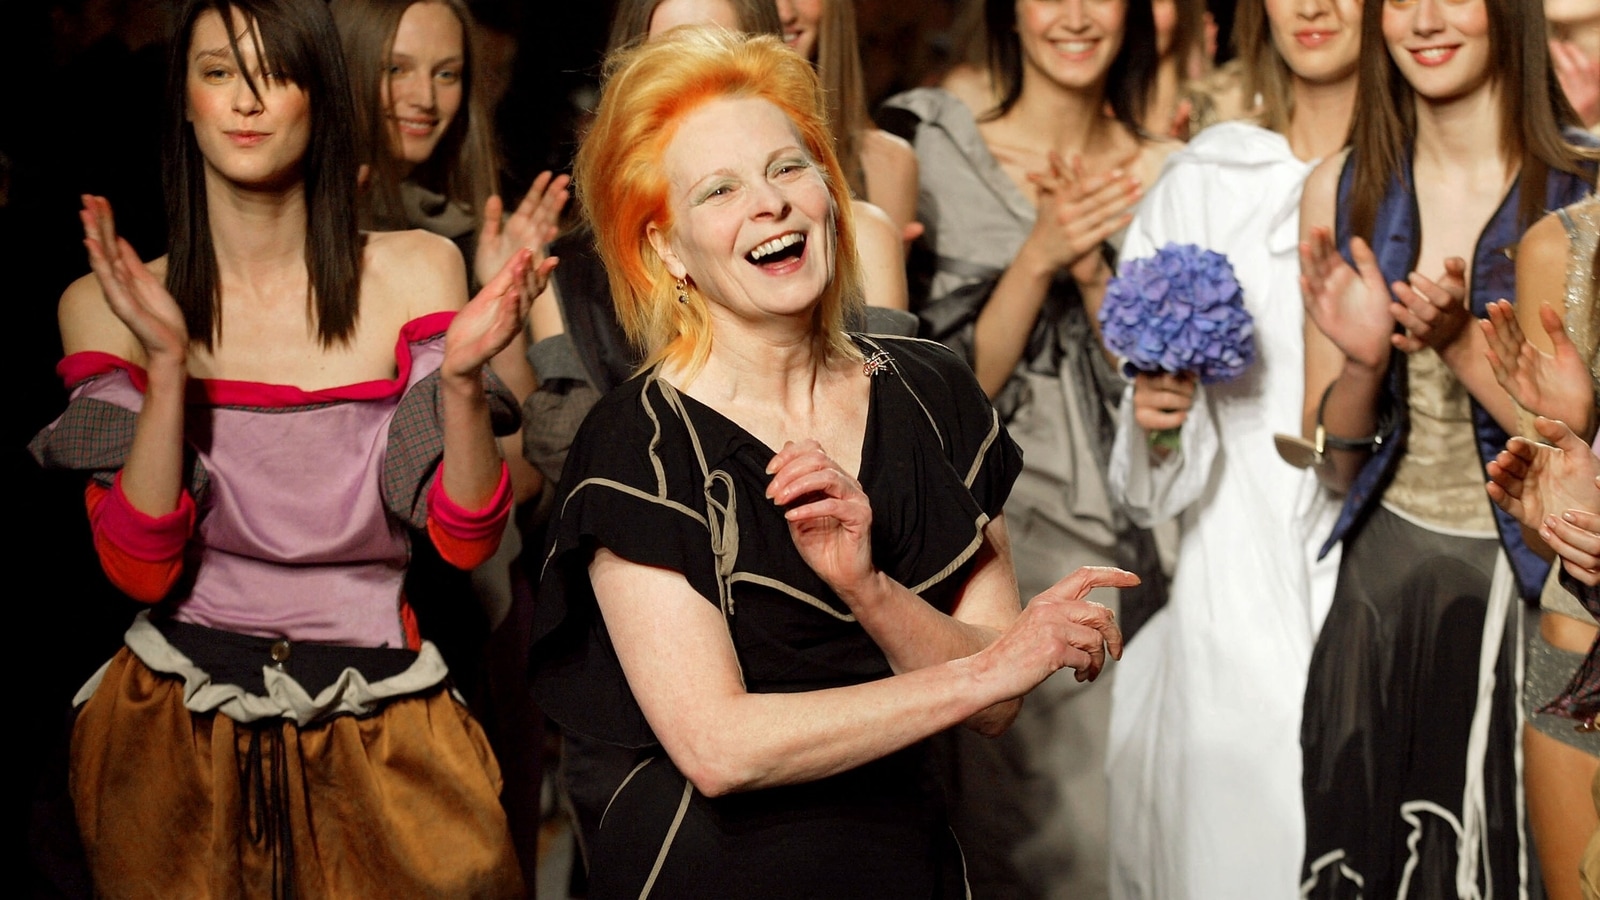 Vivienne Westwood, Iconic Punk Fashion Designer, Dead at 81